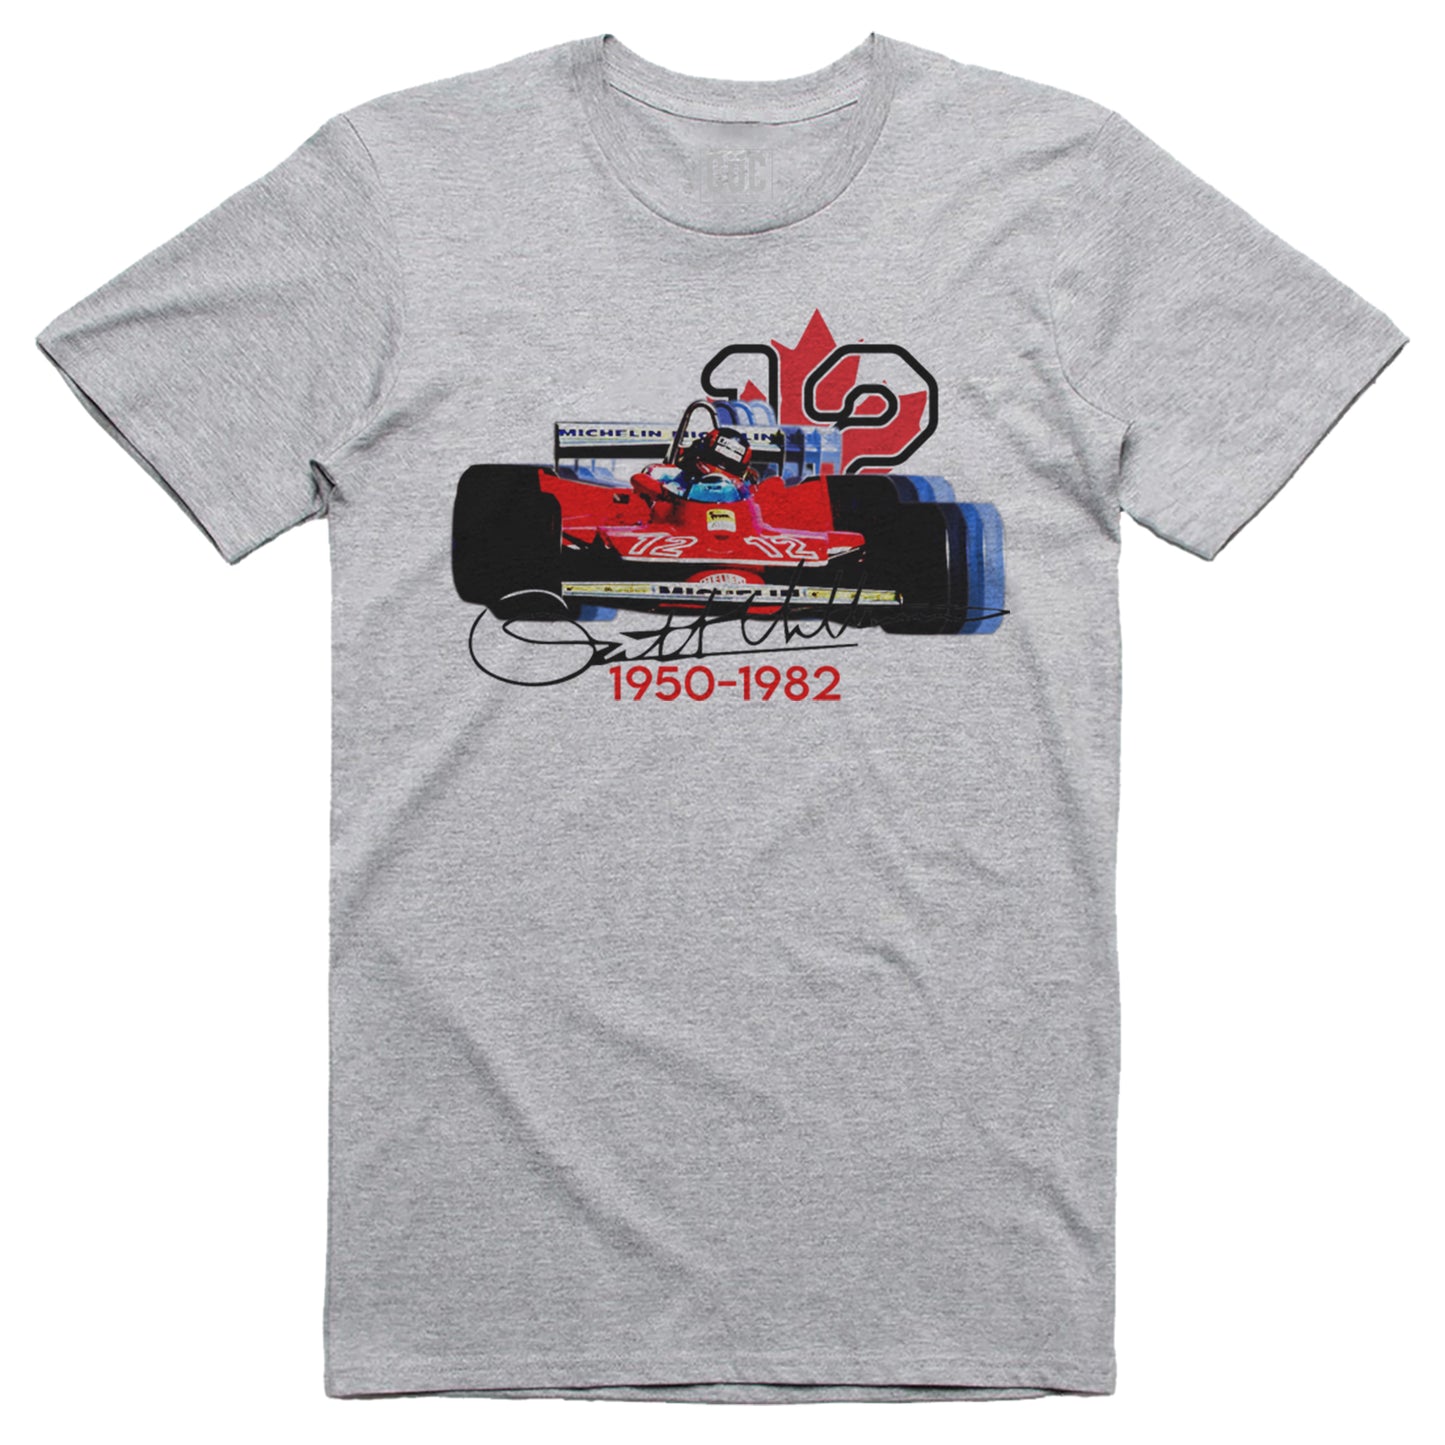 CUC T-shirt gilles villeneuve - Campione formula 1 Icona automobilismo - Icon - #ChooseurColor - CUC chooseurcolor